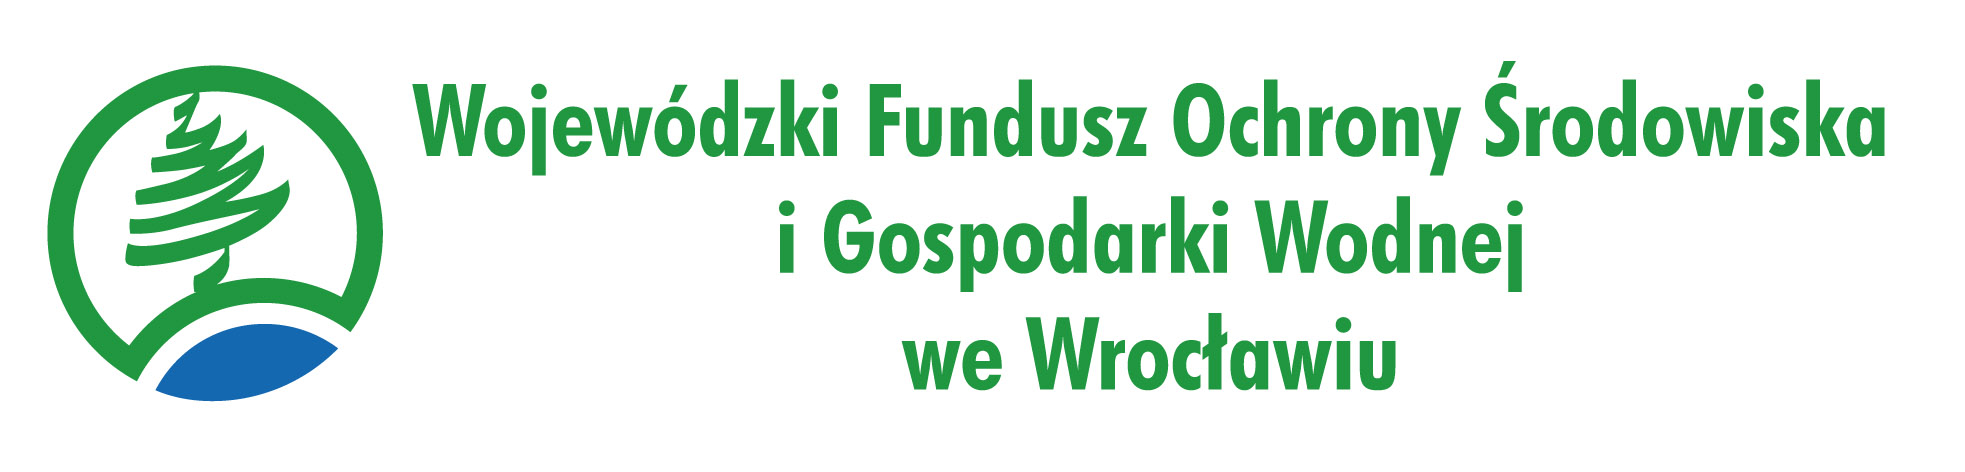 https://wfosigw.wroclaw.pl/files/download_pl/673_logo-jpg.jpg